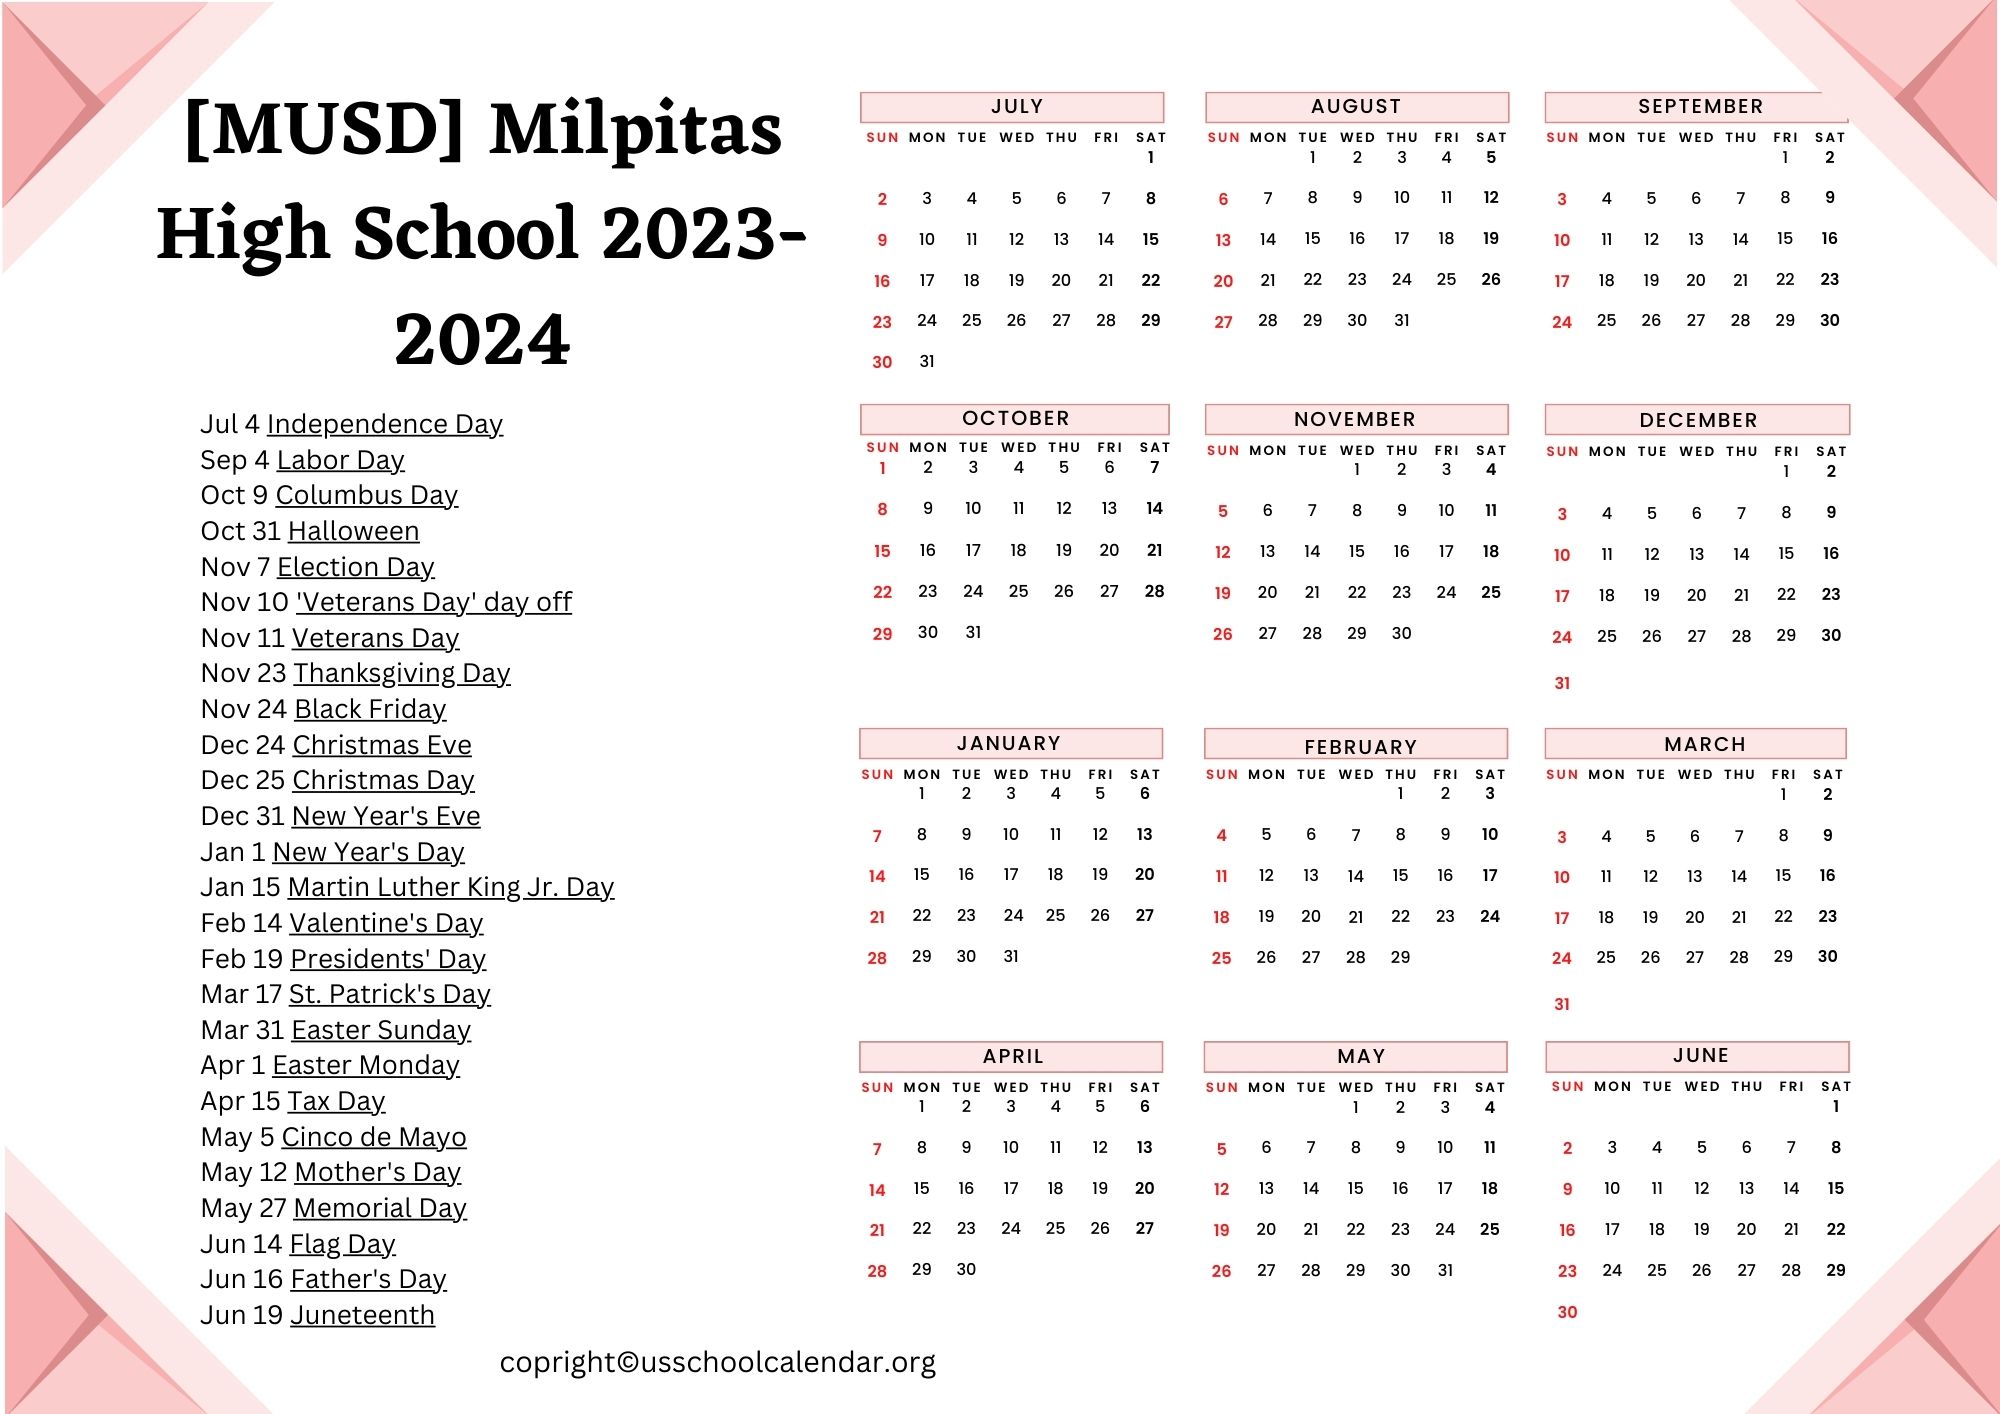 [MUSD] Milpitas High School Calendar with Holidays 20232024